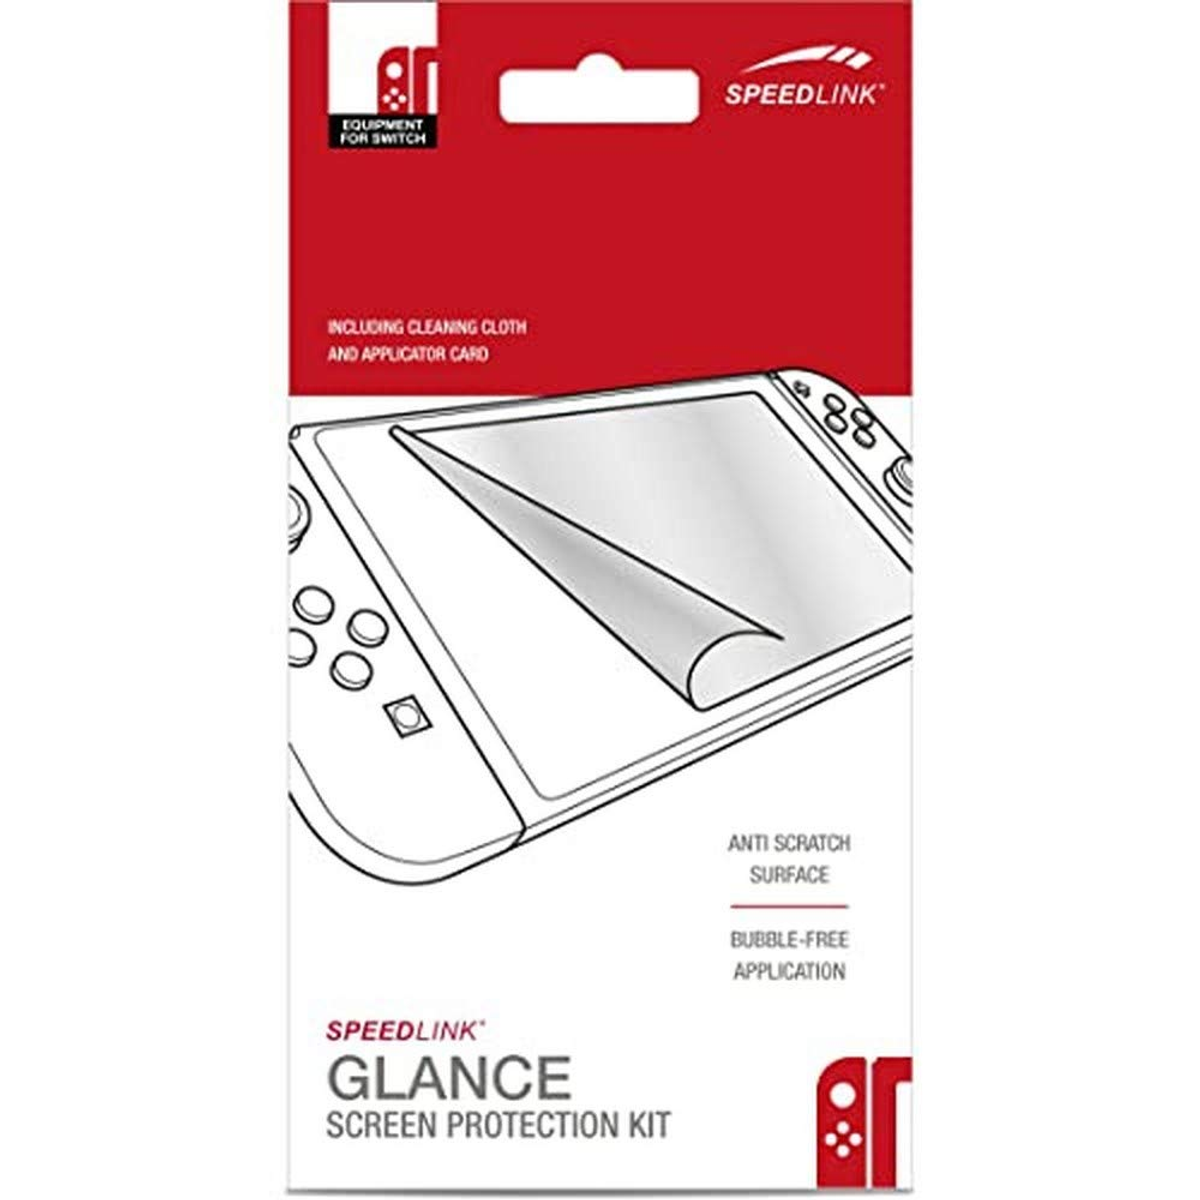 KIT GLANCE Nintendo Switch SPEEDLINK Transparent Schutzfolie, SCREEN PROTECTION SL-330500